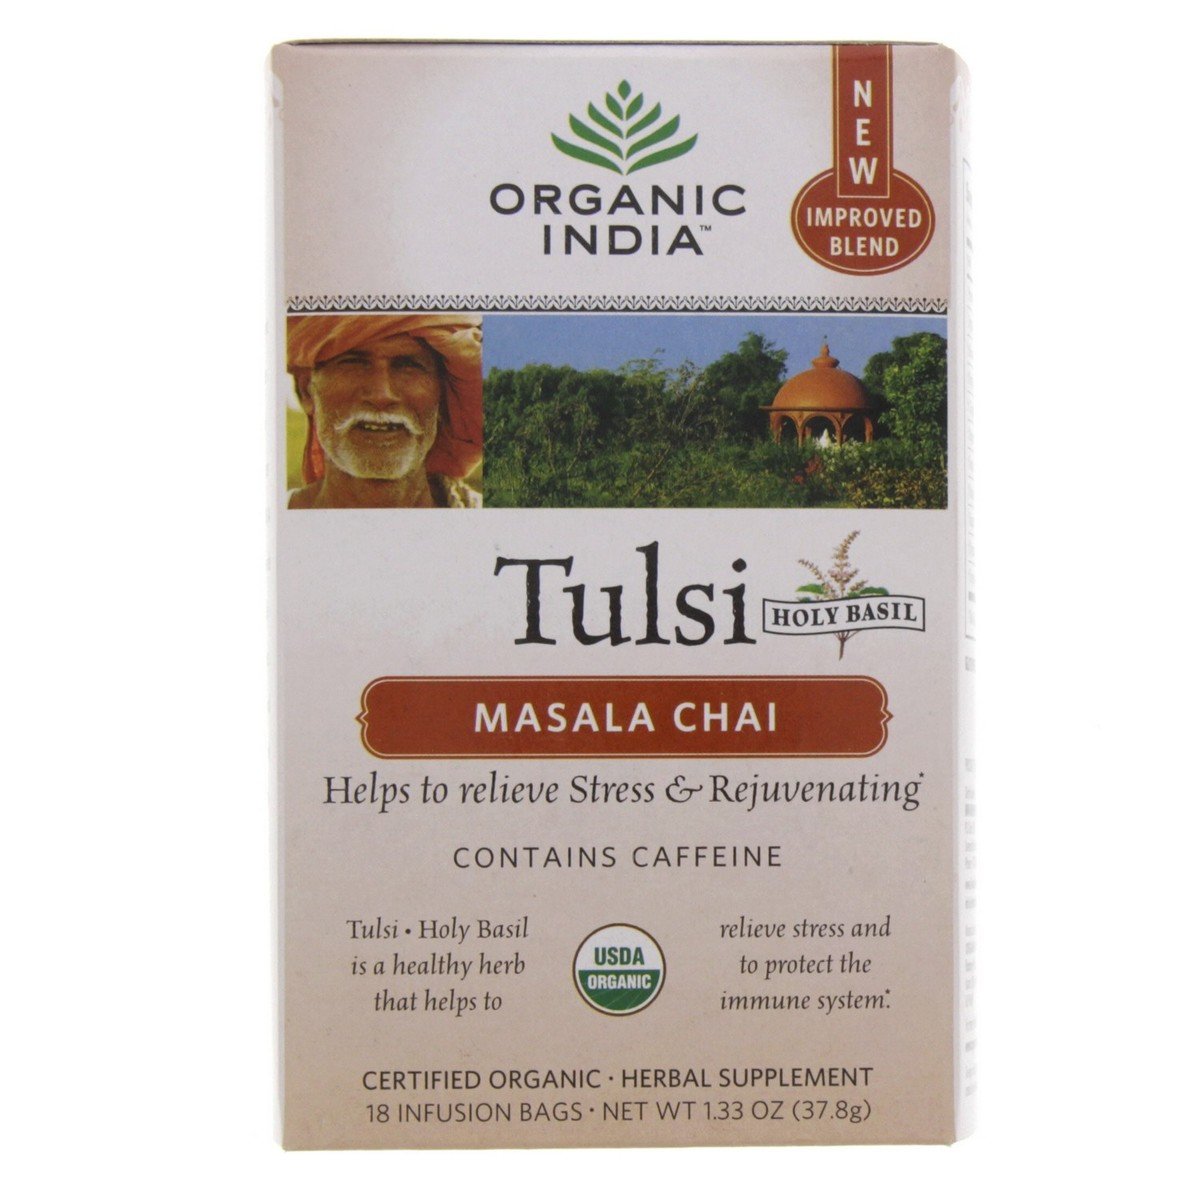 Organic India Tulsi Masala Chai 18 Infusion Bags